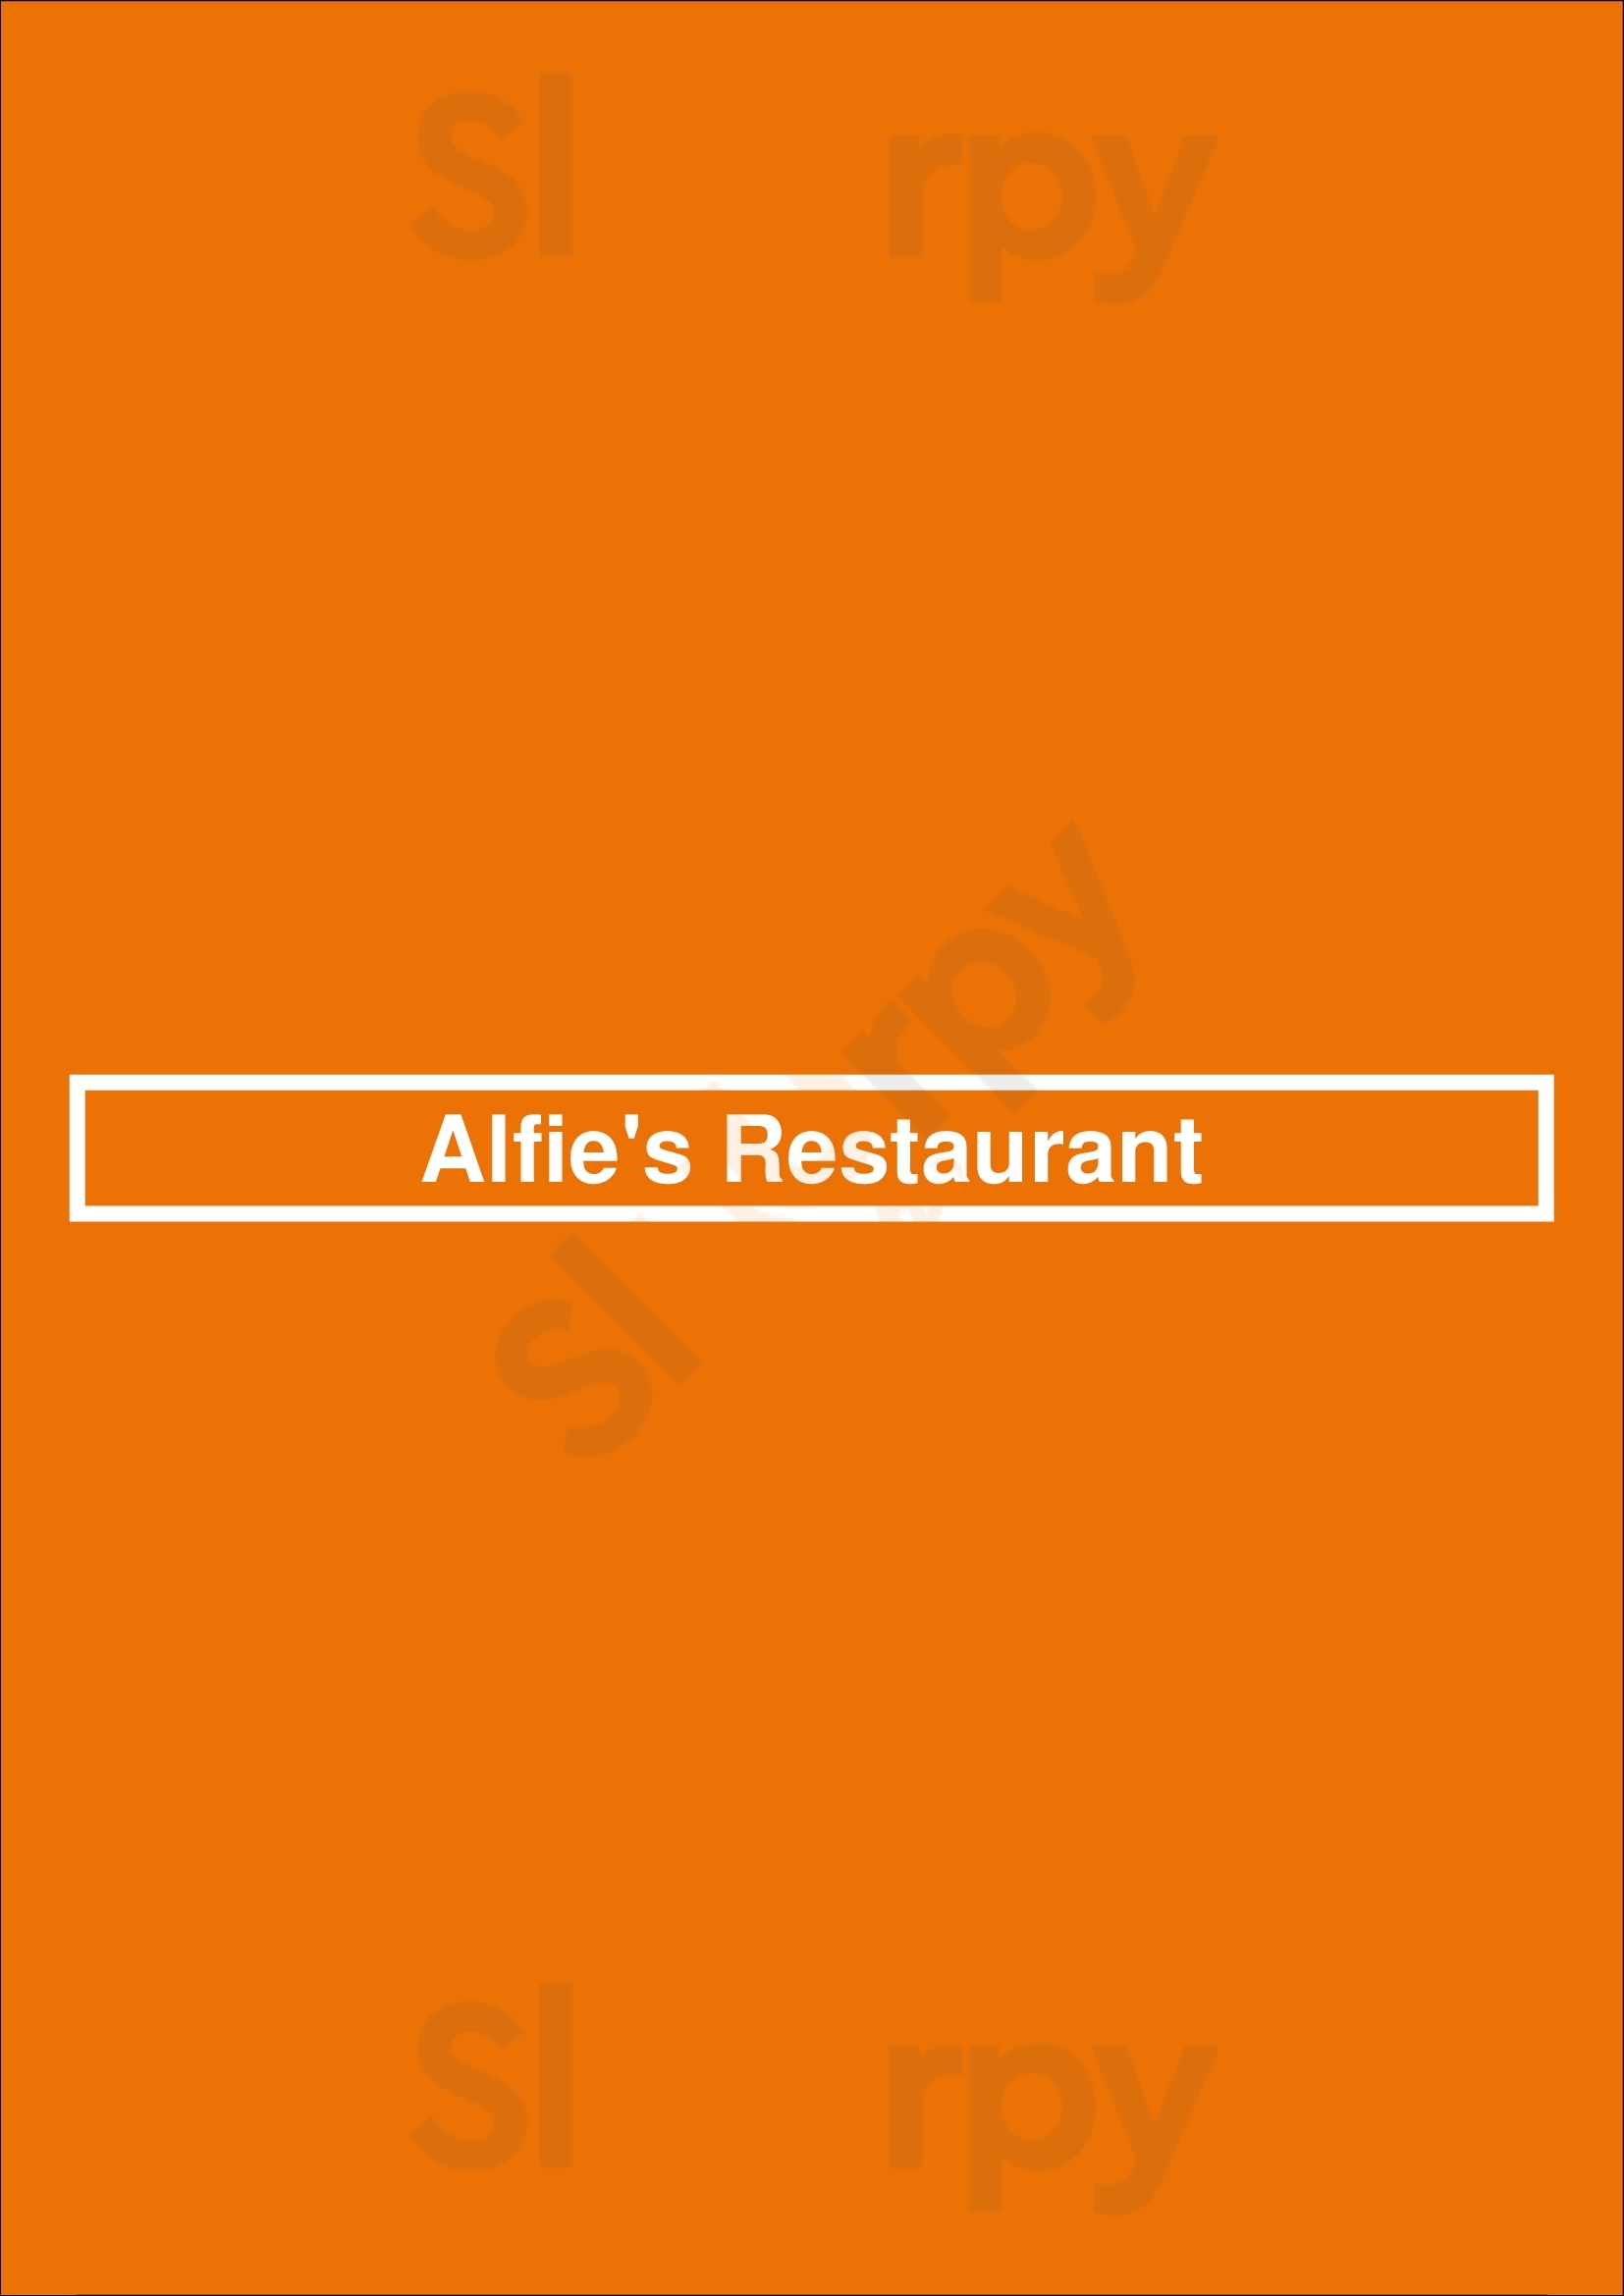 Alfie's Restaurant Dublin Menu - 1